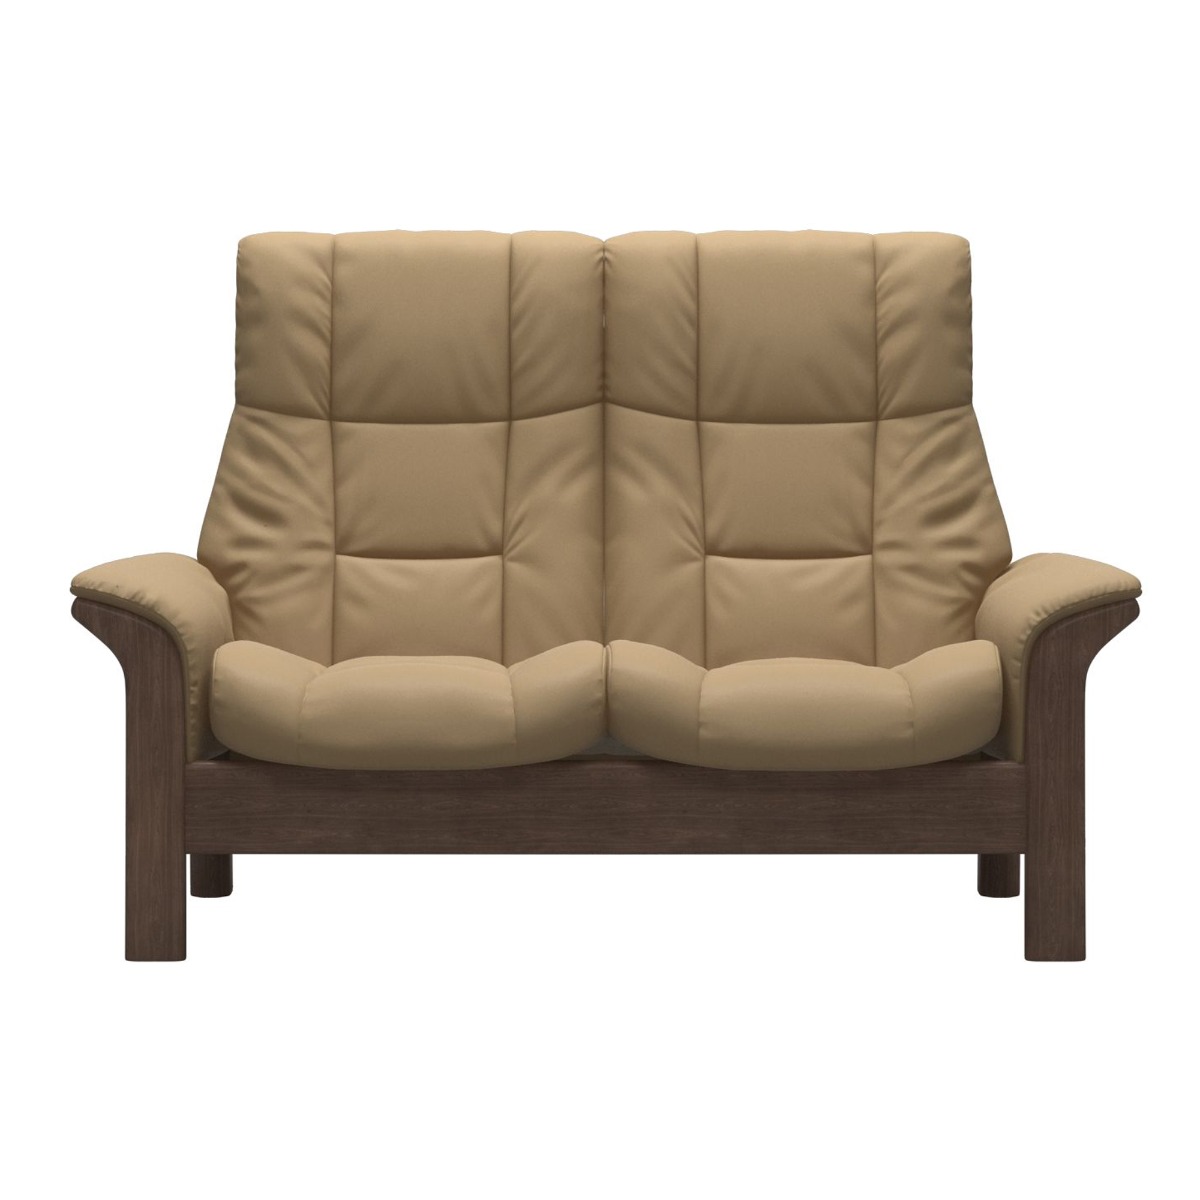 Stressless Windsor High Back 2 Seater Recliner Sofa, Neutral Leather | Barker & Stonehouse